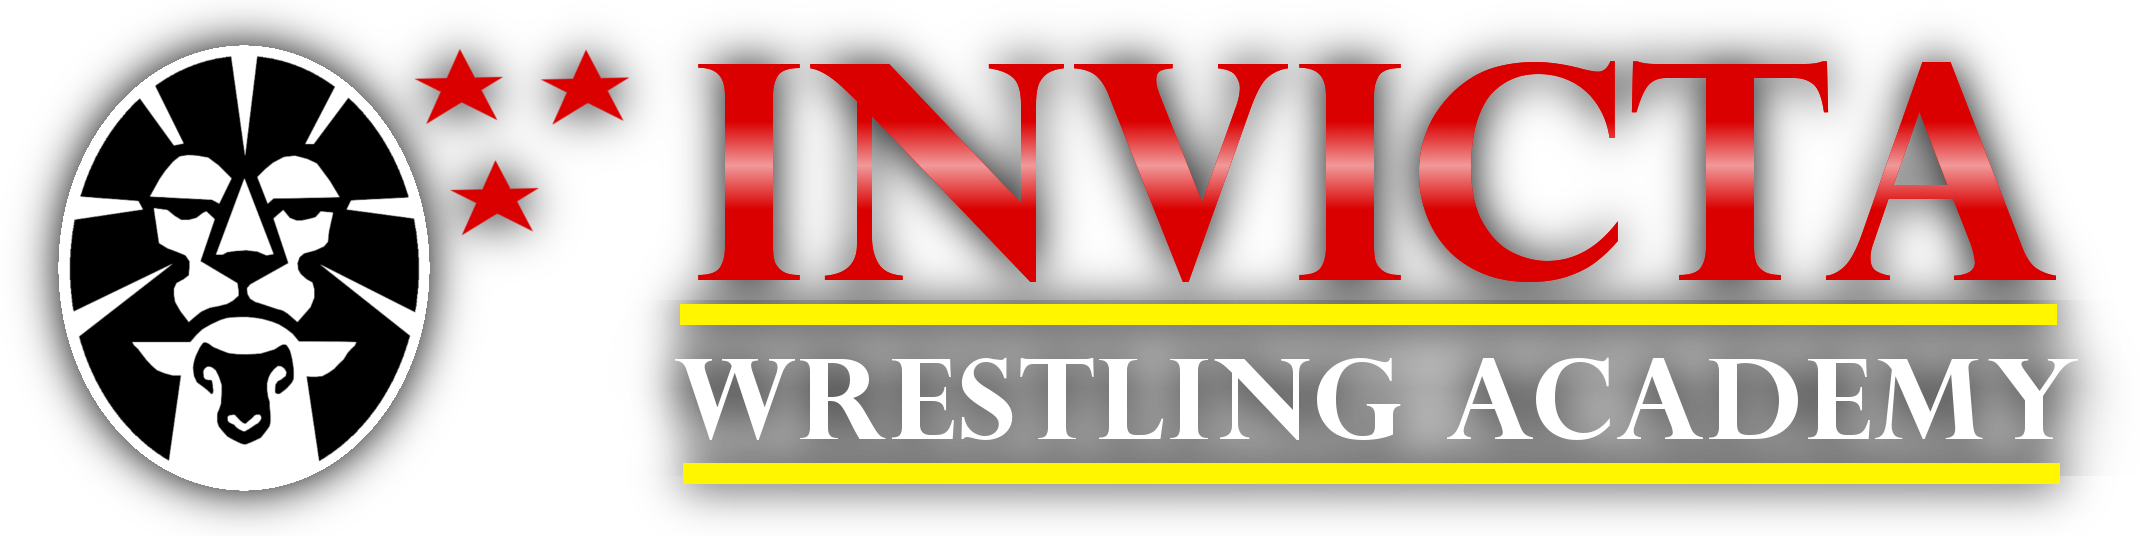 Invicta Wrestling Academy